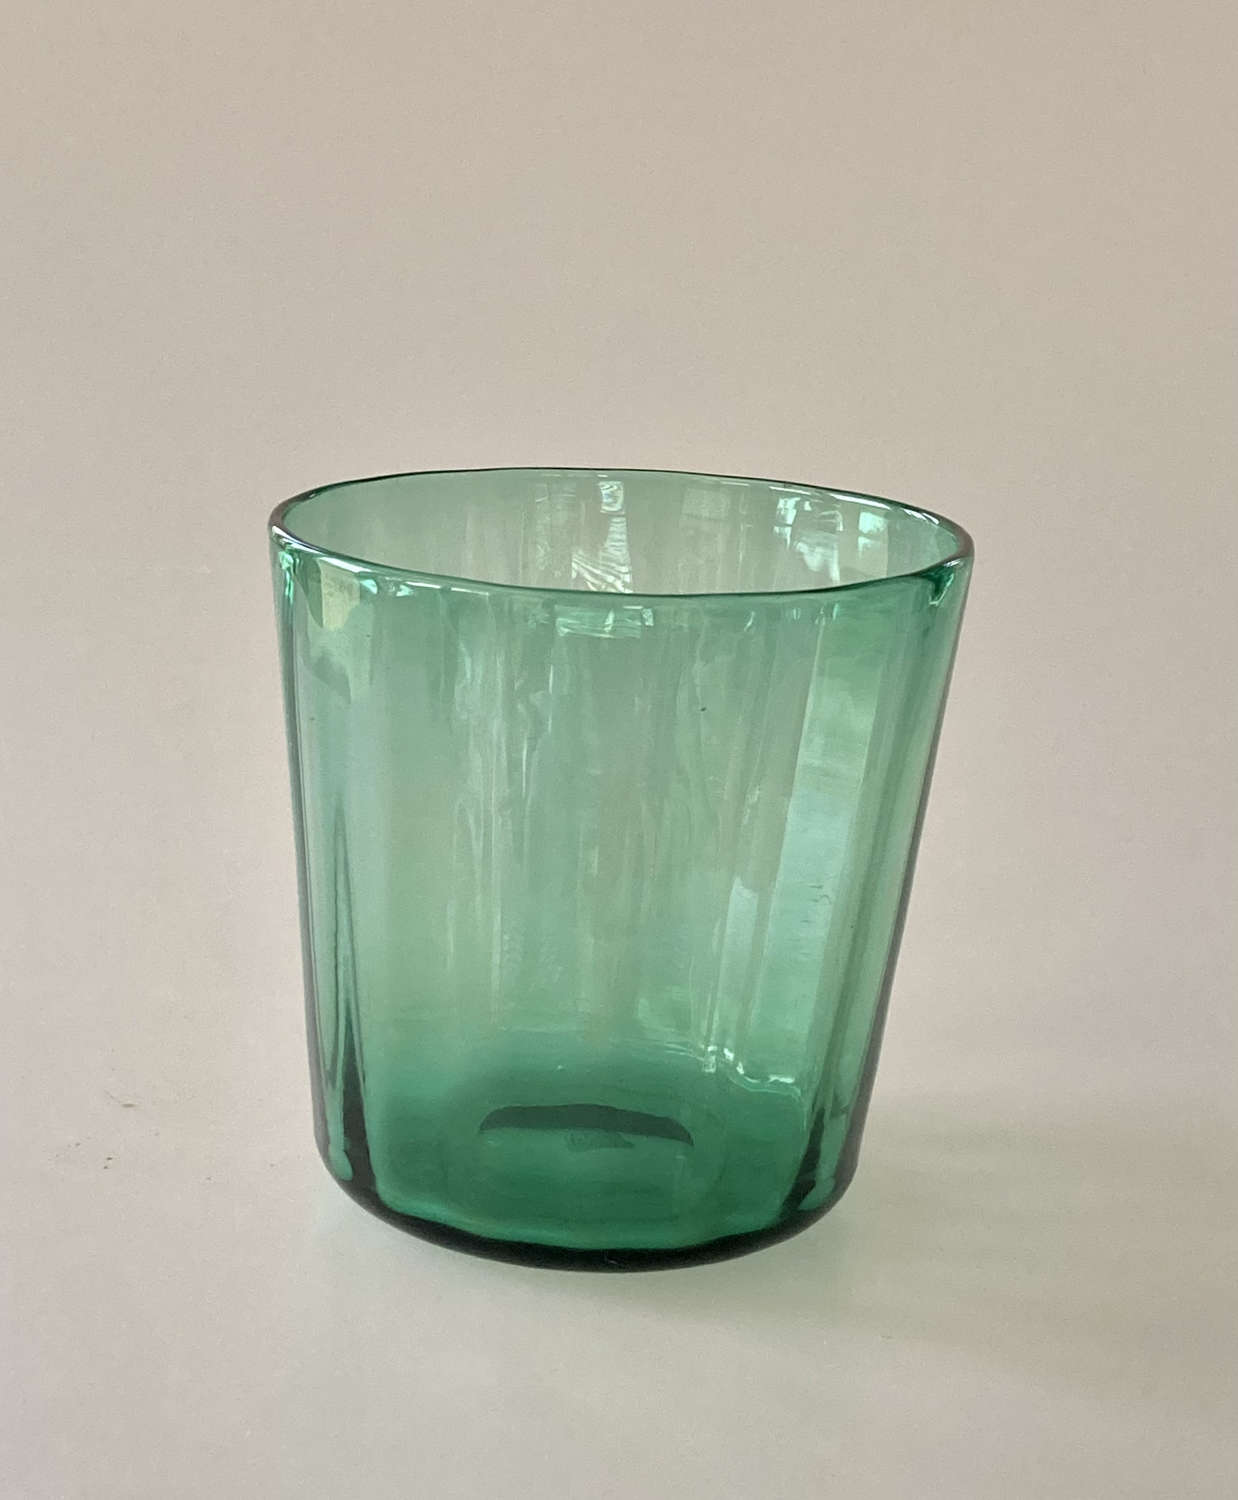 Green optic tumbler vase.